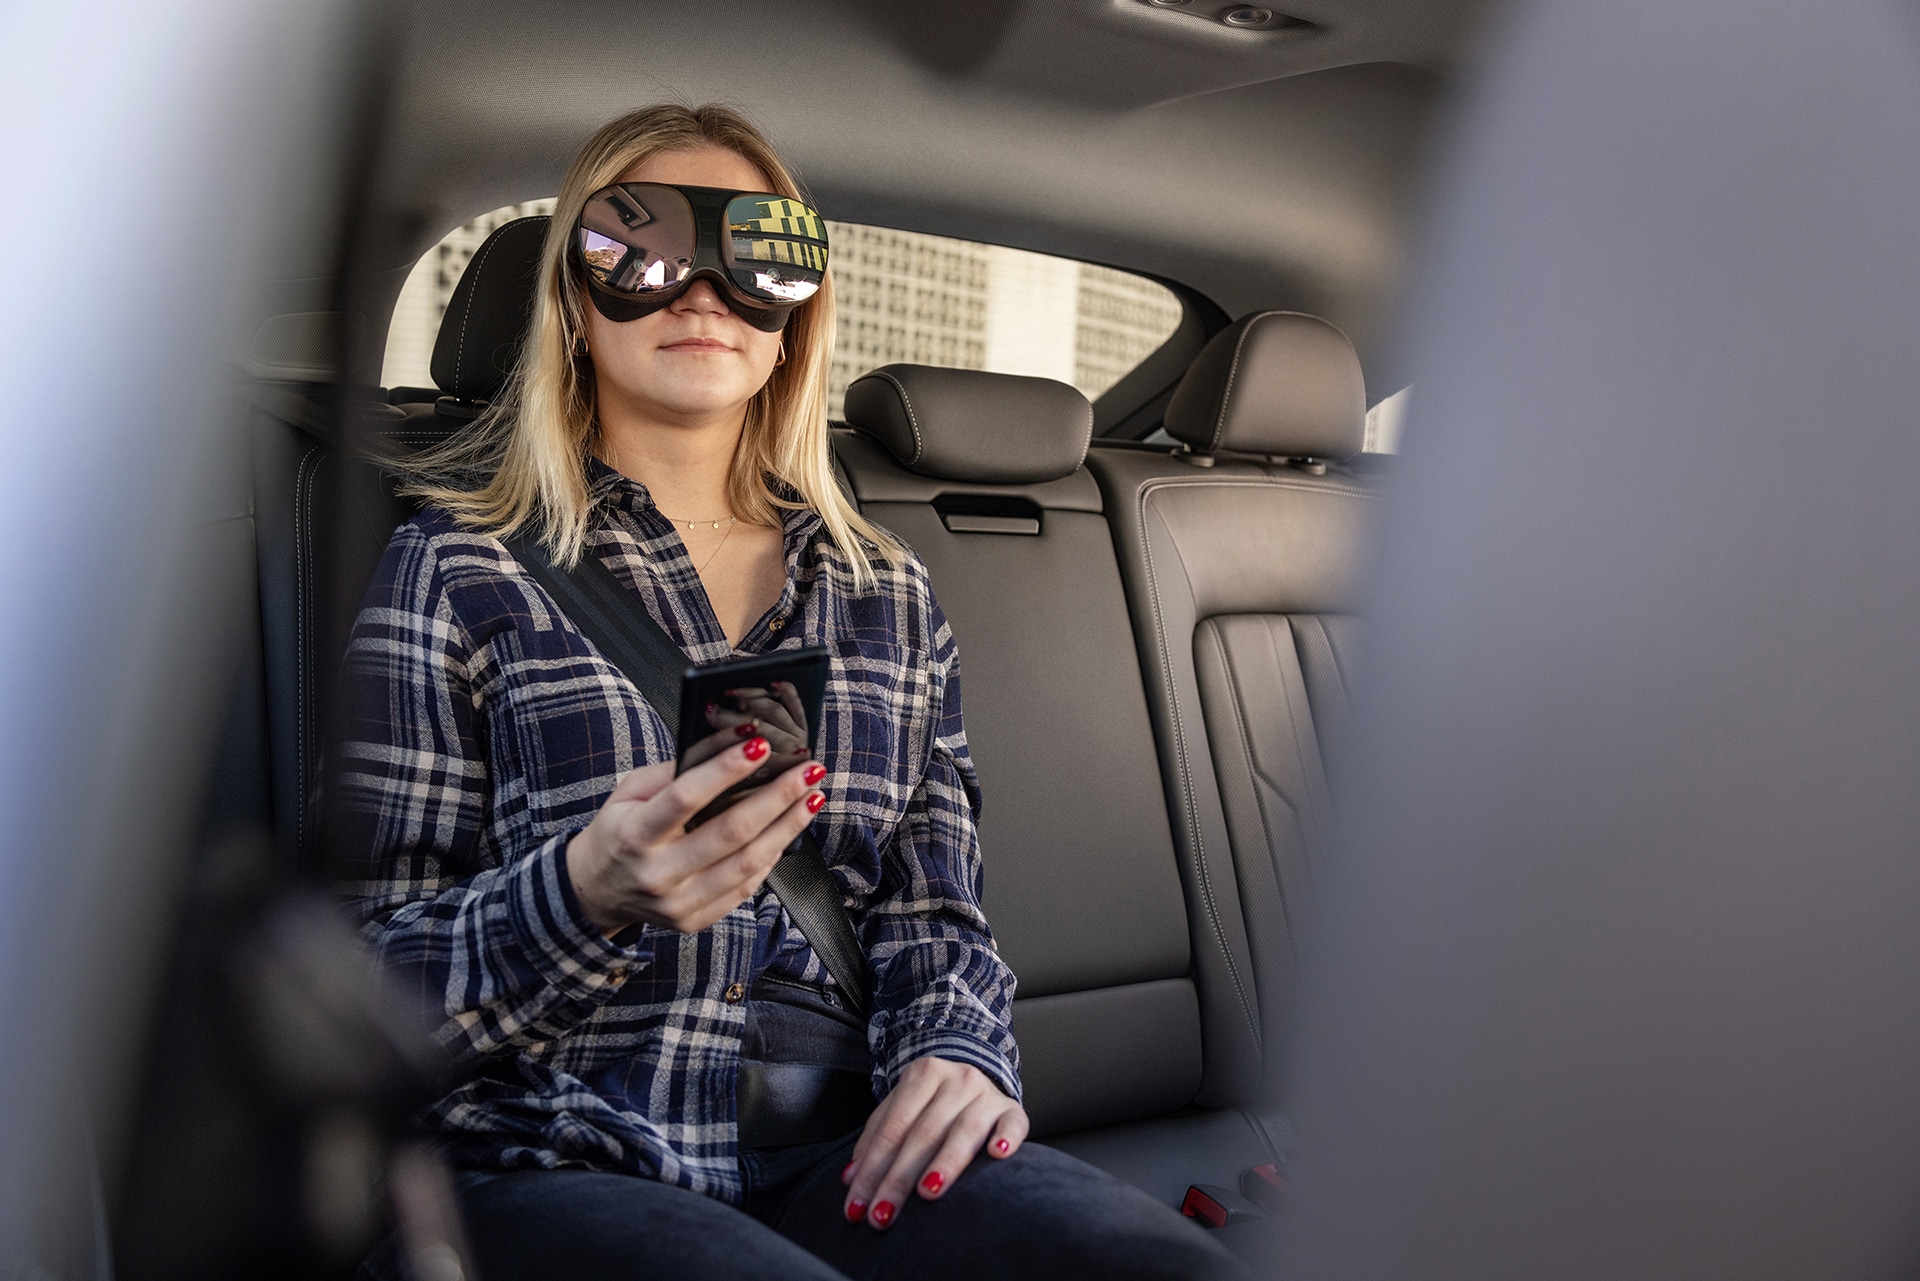 AUDI HOLORIDE SXSW 6 Τι είναι η νέα πλατφόρμα εικονικής πραγματικότητας της Audi